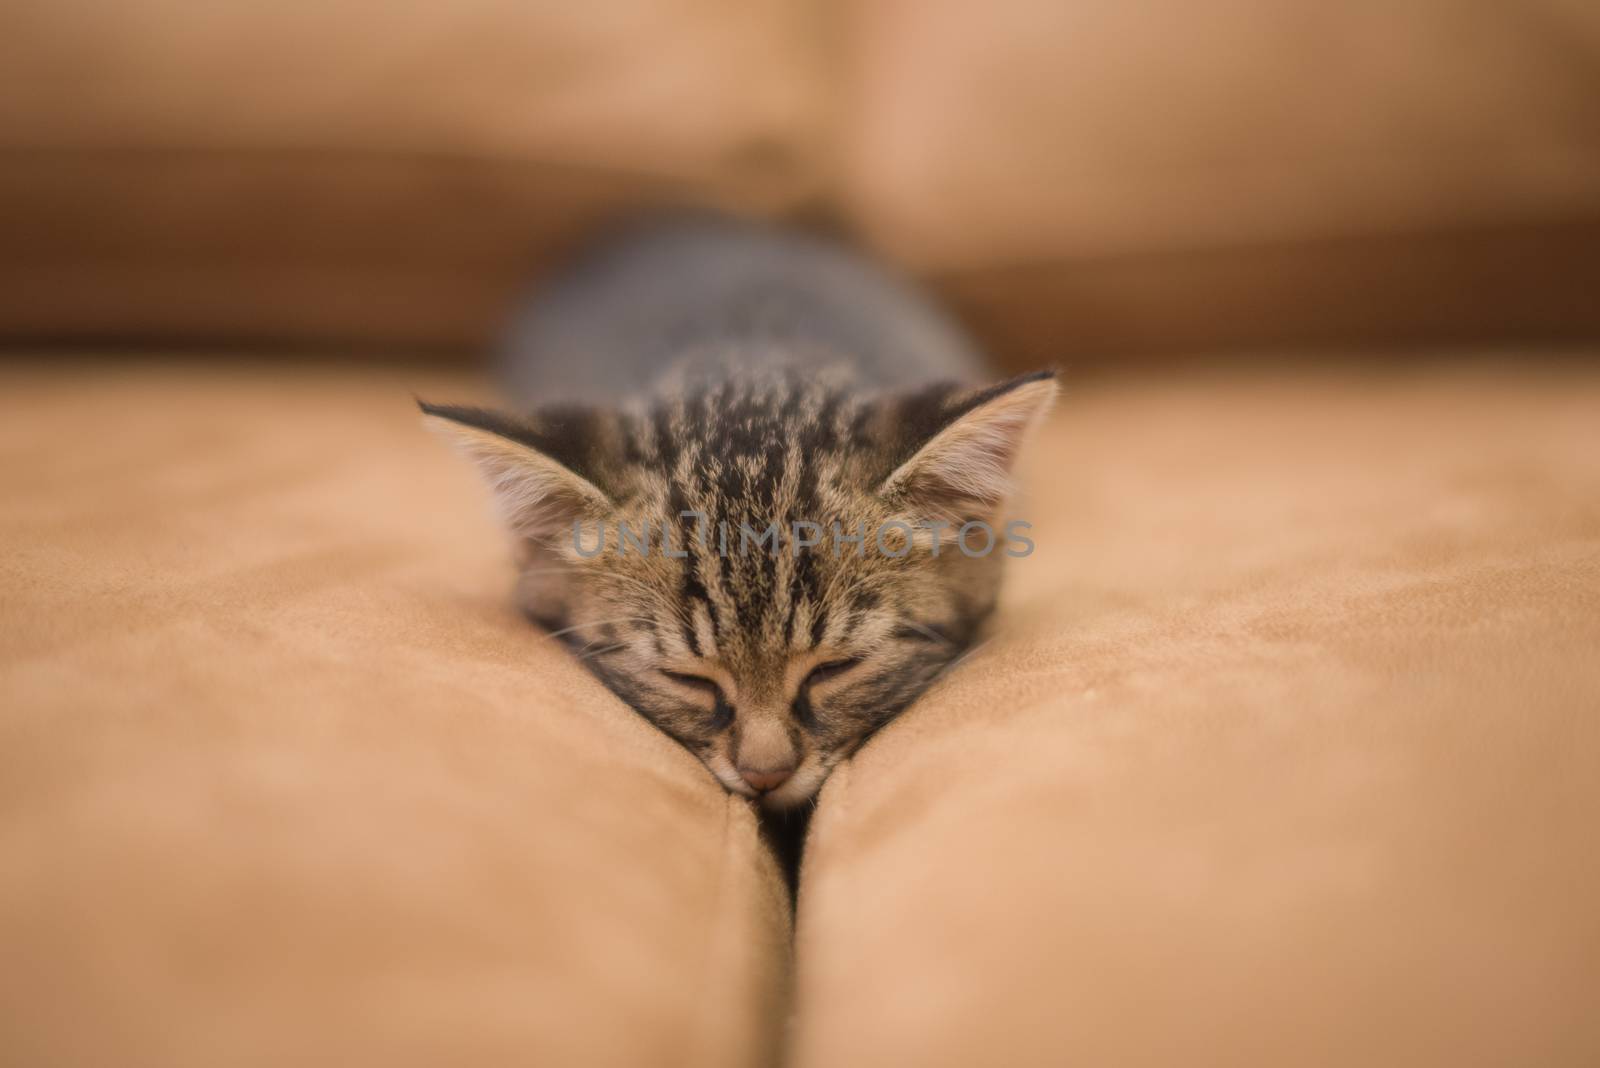 Sleeping kitten by ozkanzozmen